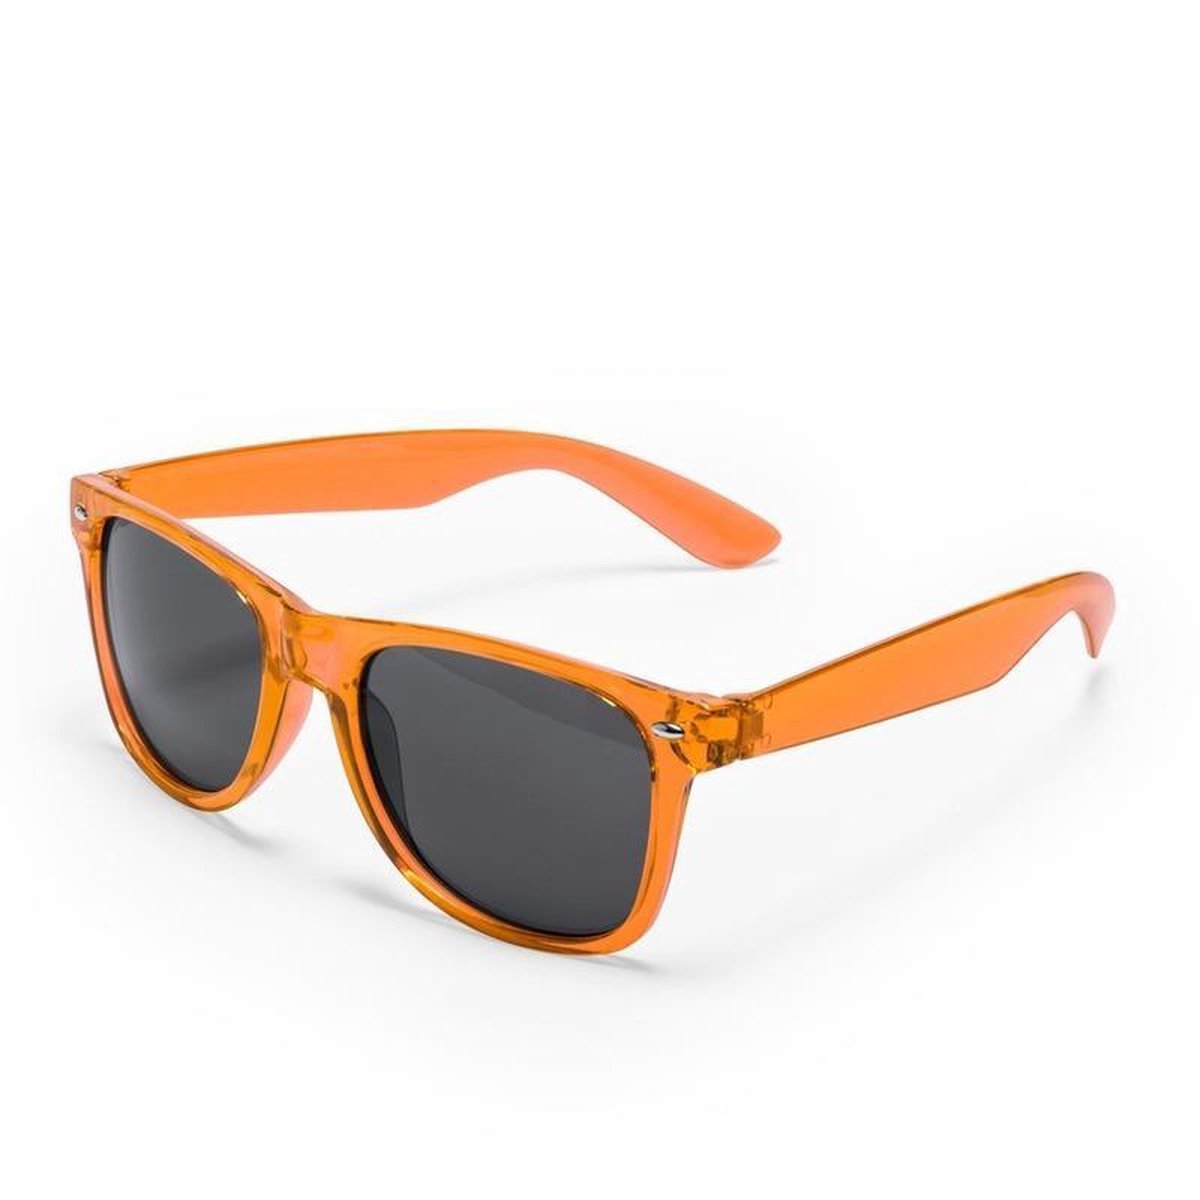 4x stuks Oranje retro model zonnebril UV400 bescherming dames/heren - Oranje fan artikelen - Festival musthaves